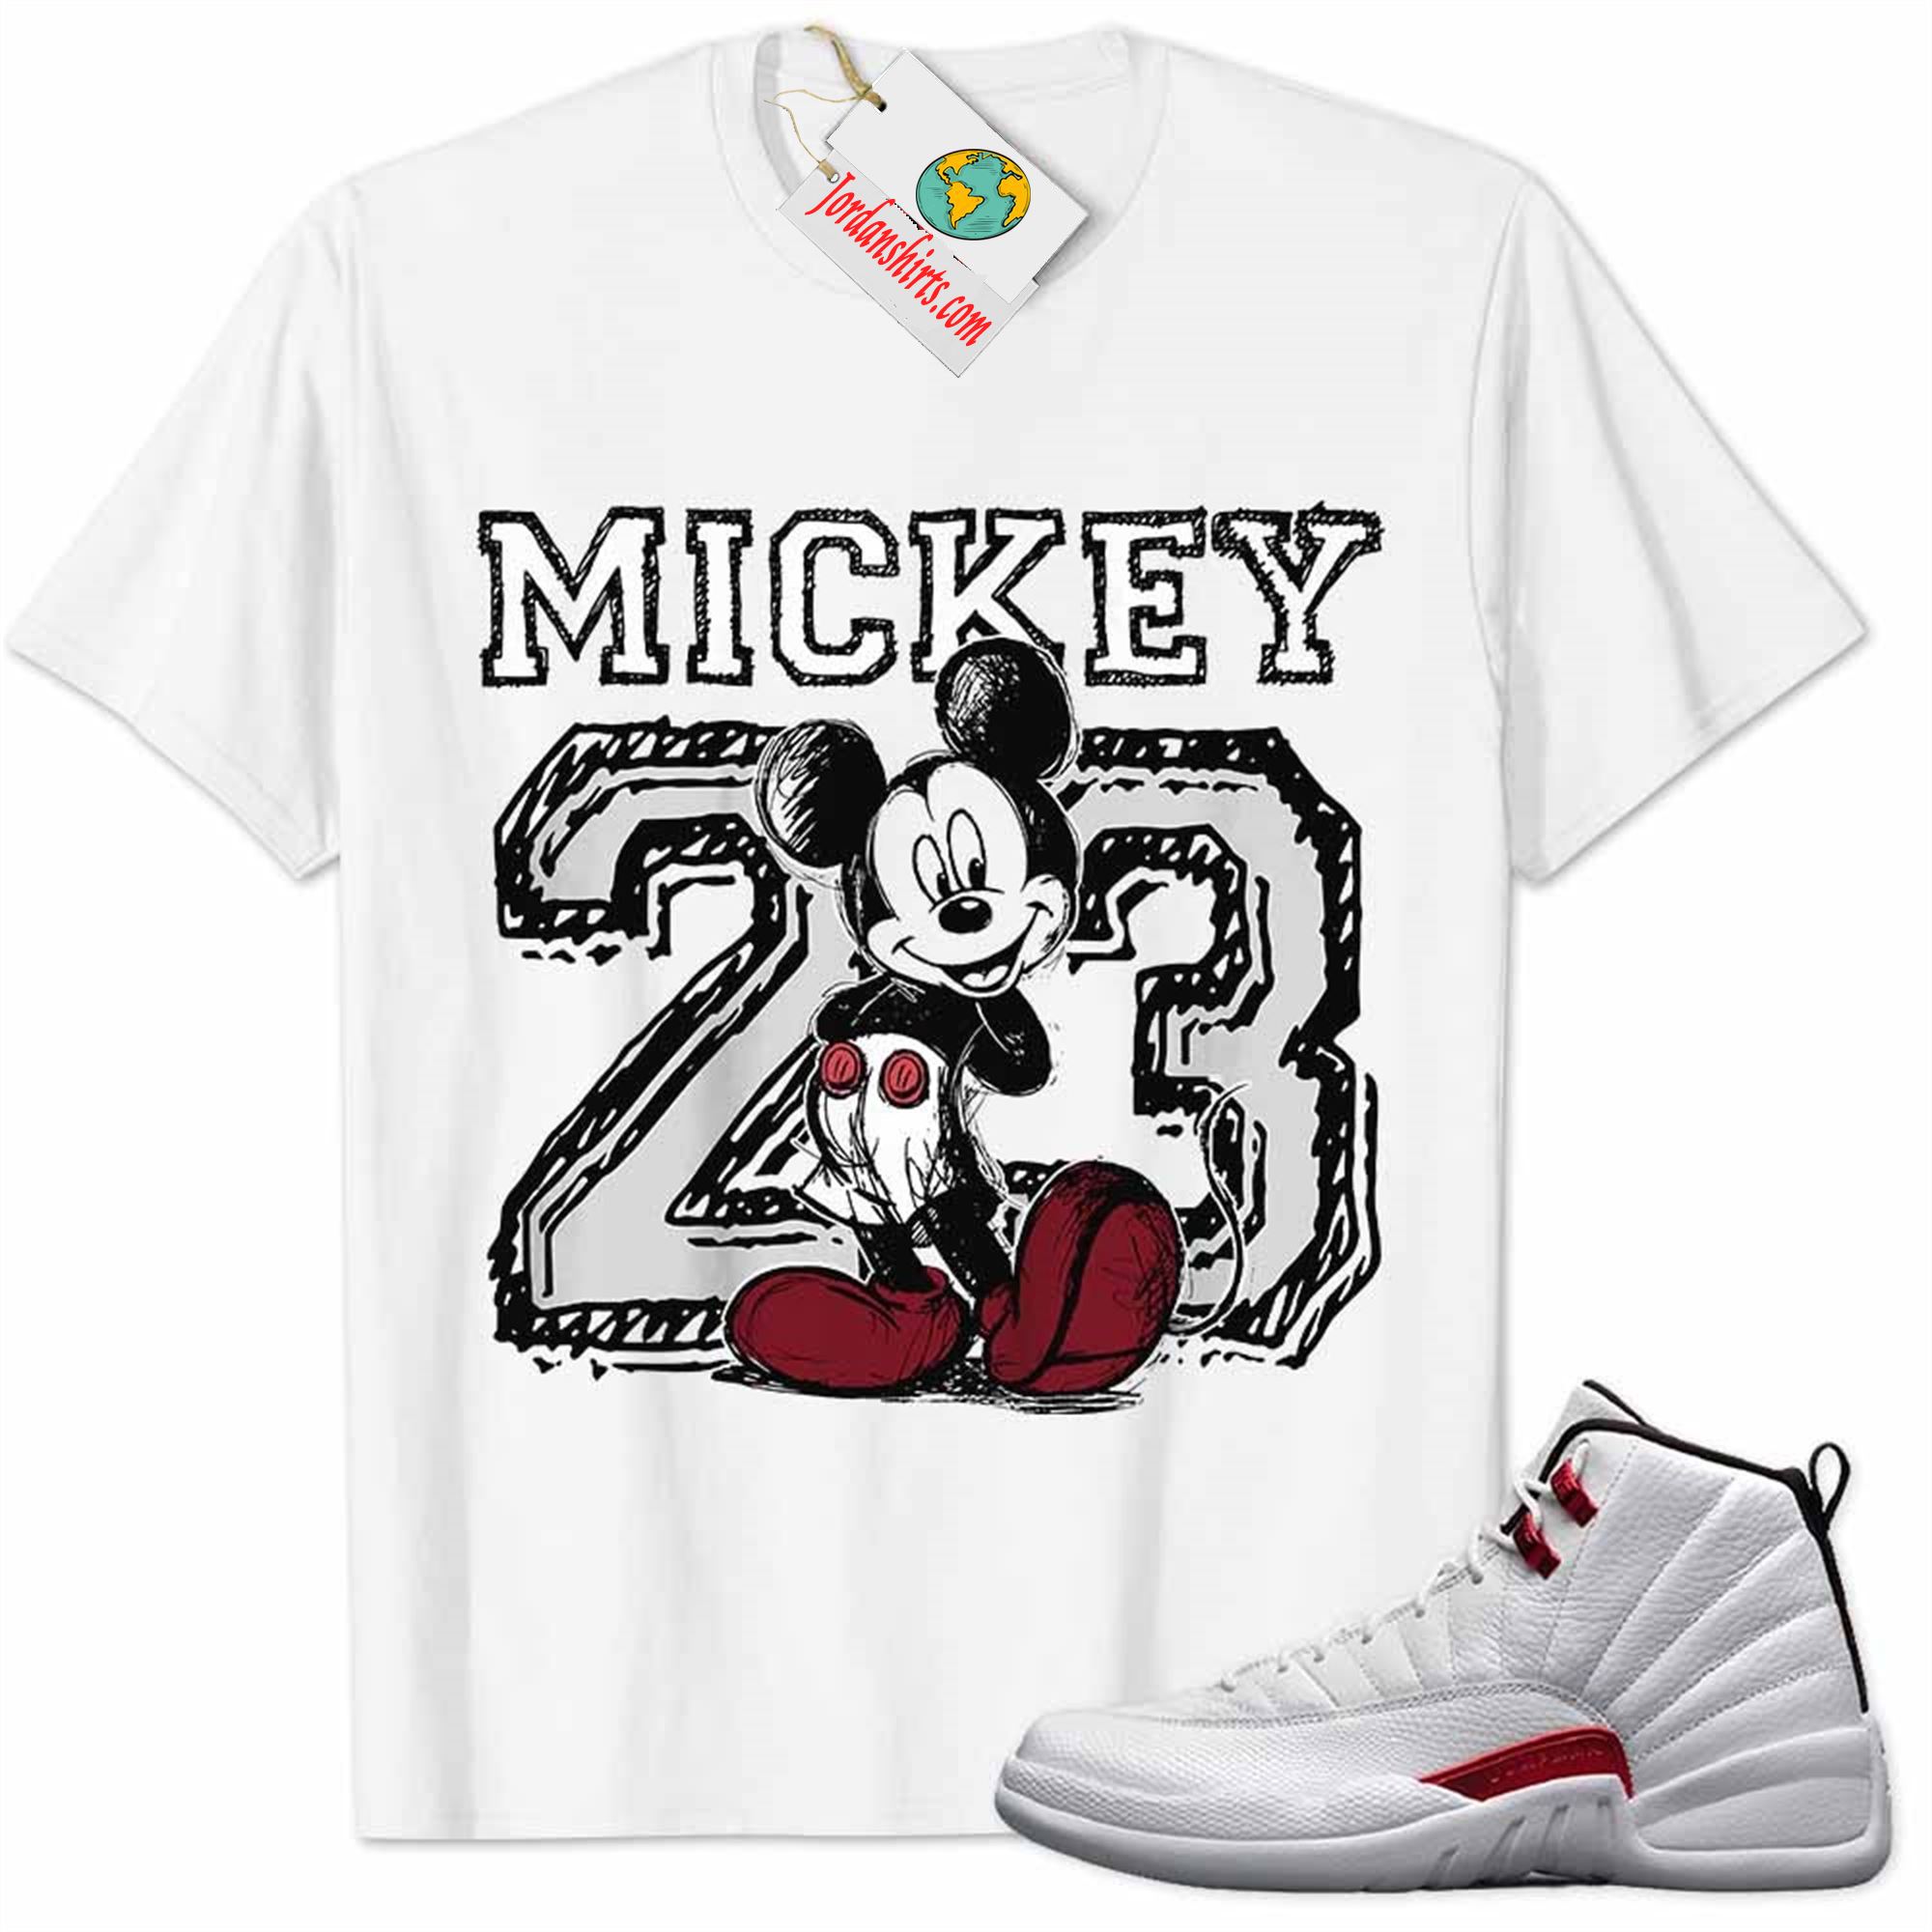 Jordan 12 Shirt, Twist 12s Shirt Mickey 23 Michael Jordan Number Draw White Full Size Up To 5xl